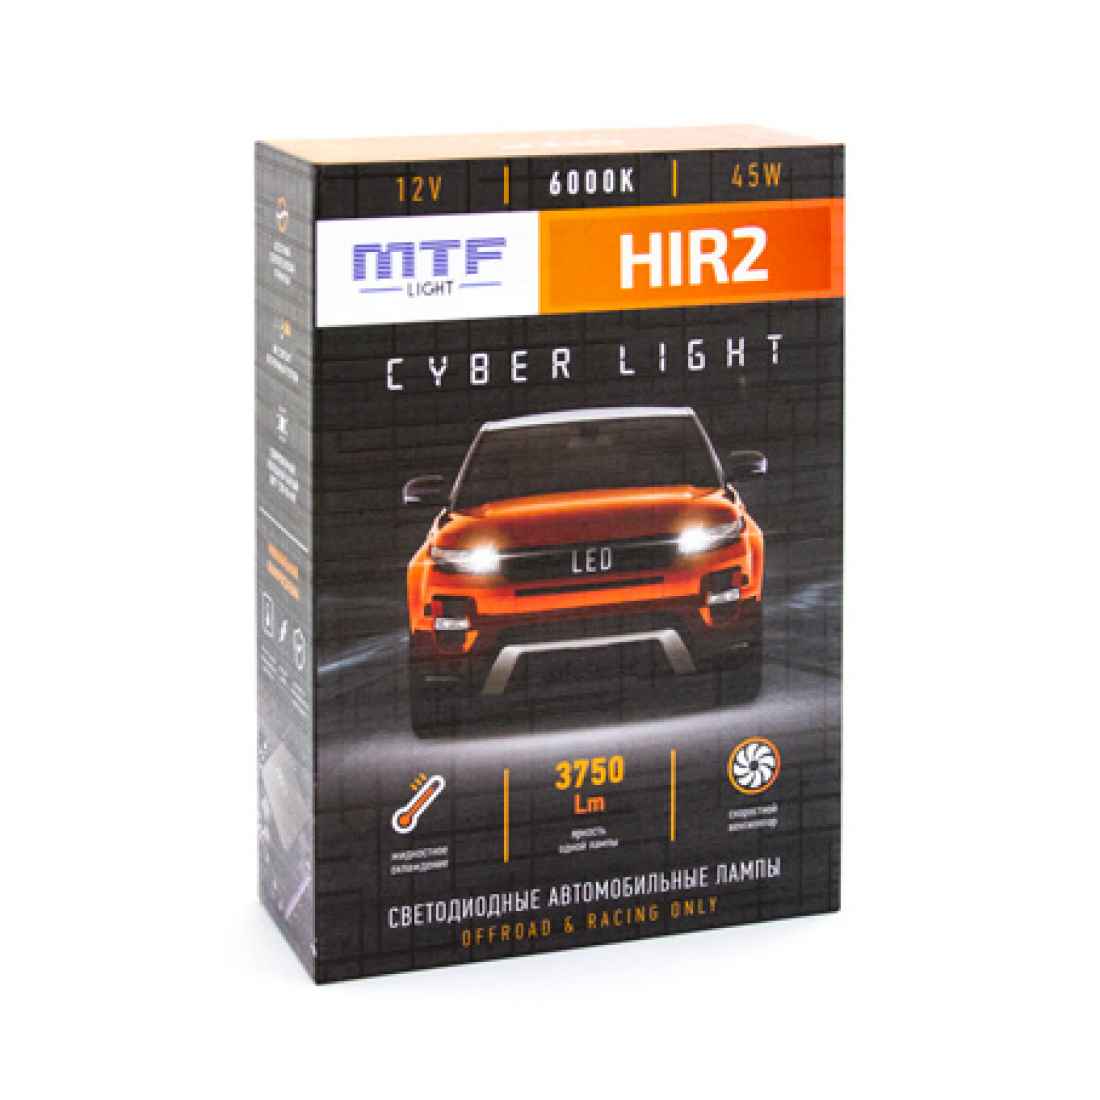 Mtf cyber light pro h7. Светодиодные лампы н1 Cyber Light. Светодиодные лампы h7 MTF-Light Cyber Light 6000к. Светодиодные лампы h7 MTF-Light Cyber Light 12v. Светодиодная лампа MTF Cyber Light h1, 6000к,.